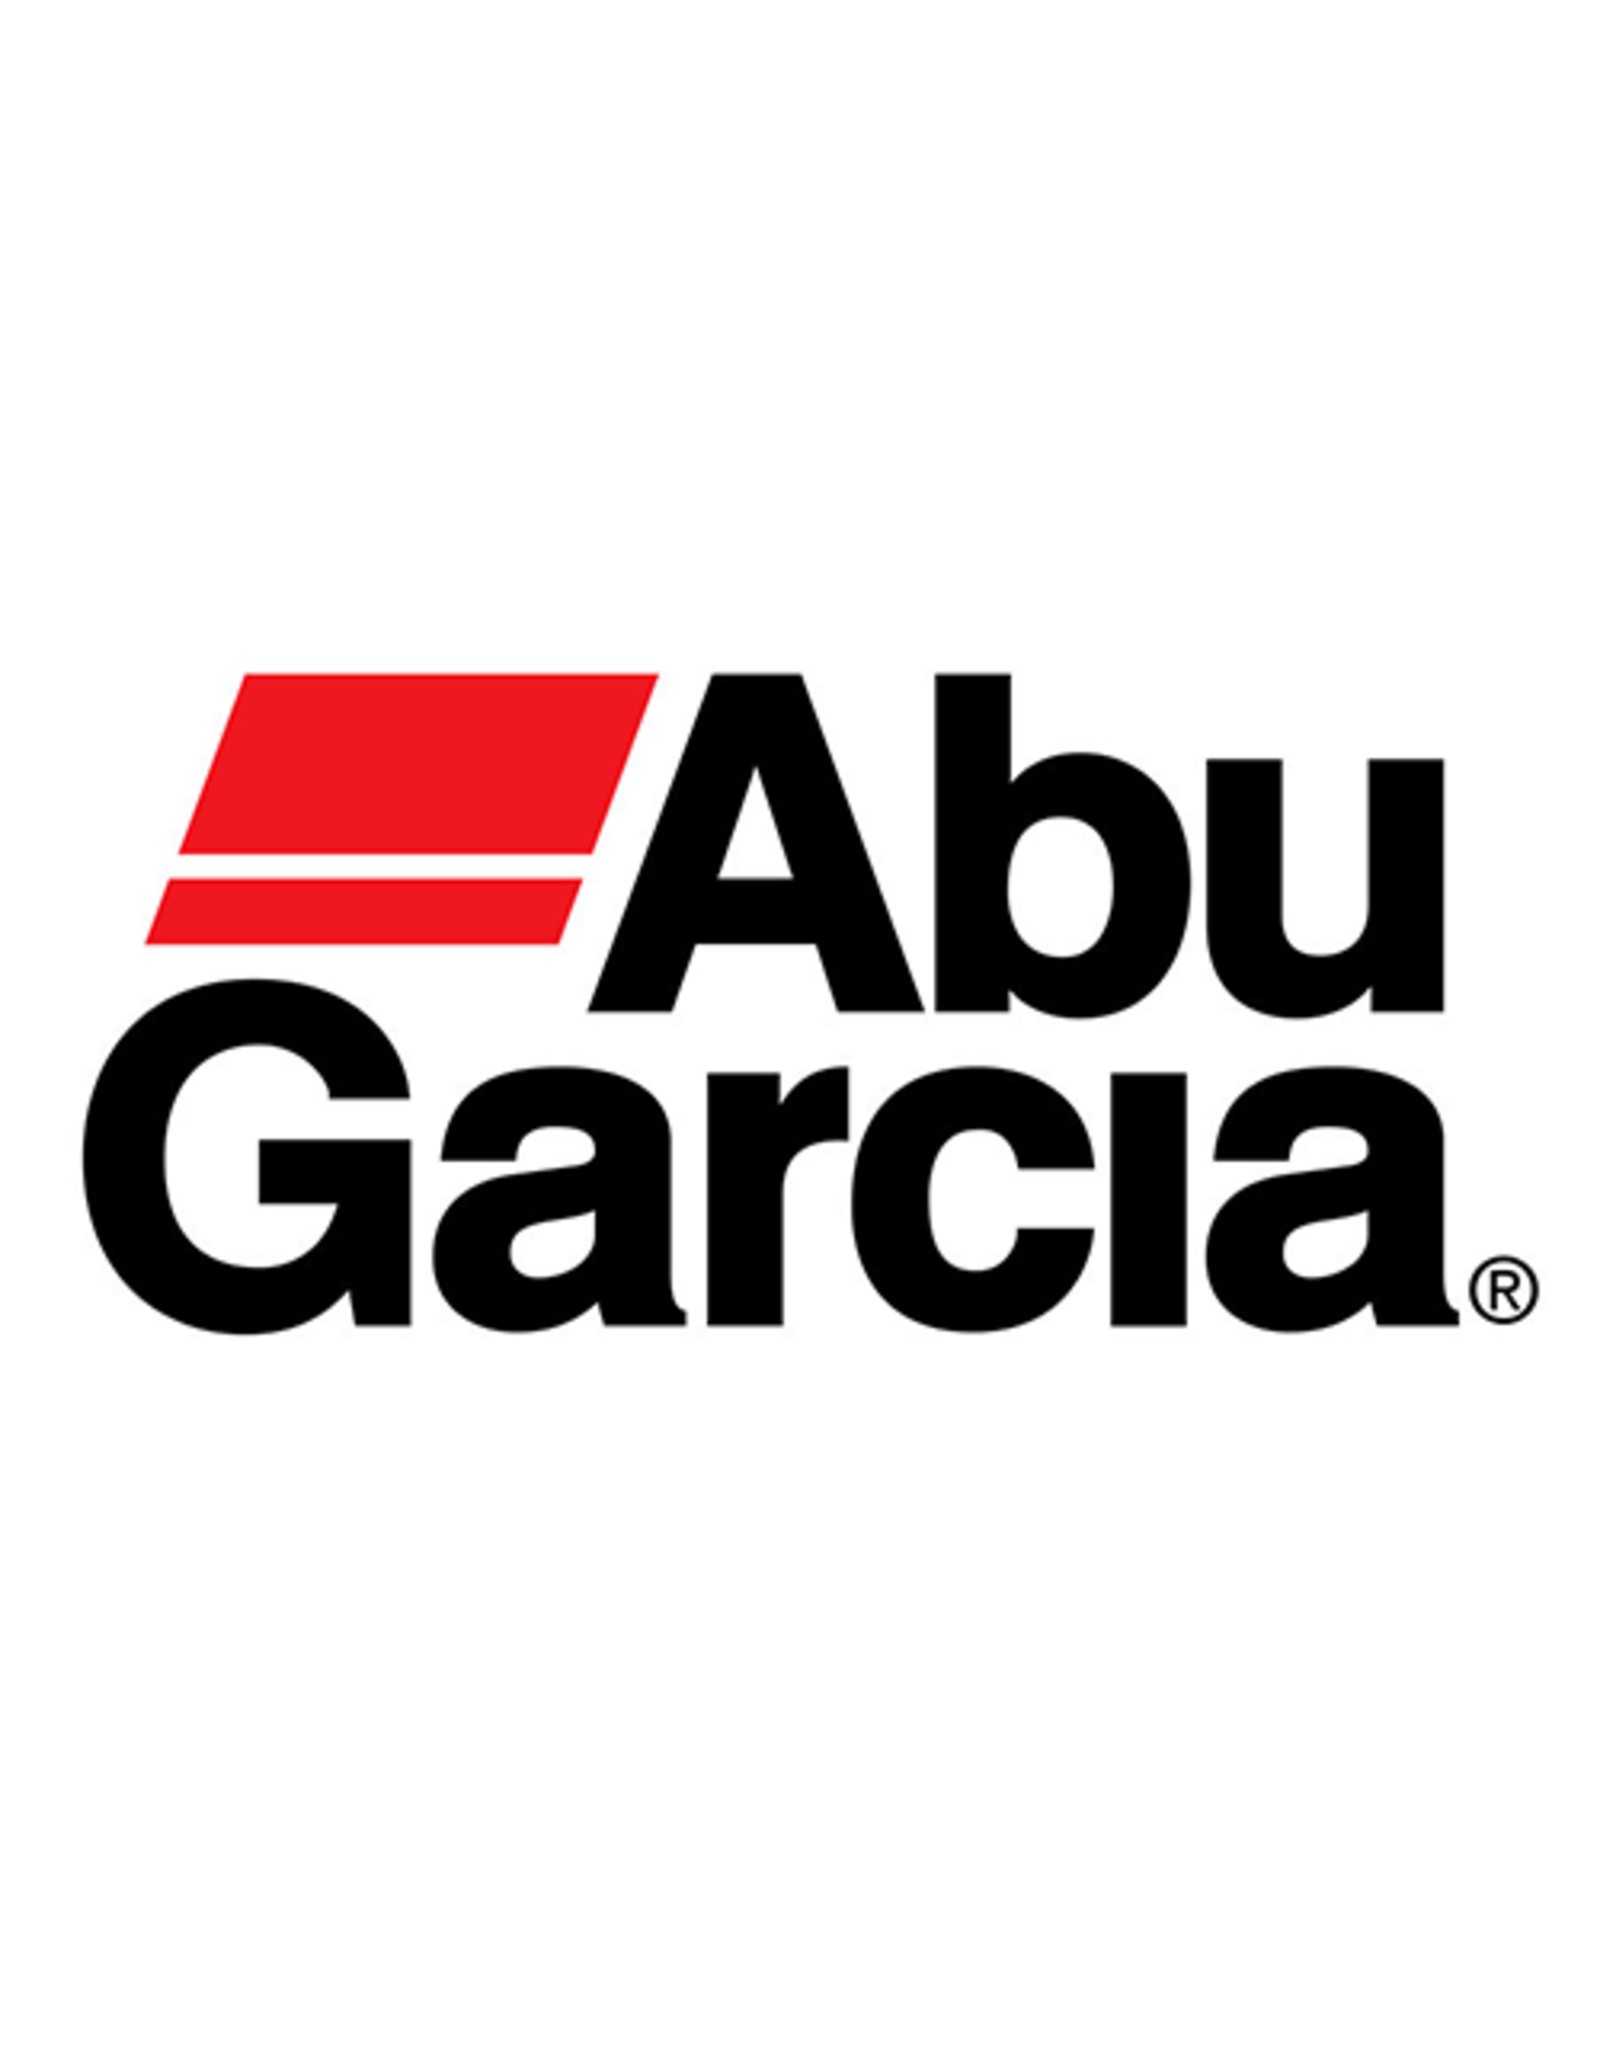 Abu Garcia 1107437  BEARING HOUSING COMPLETED